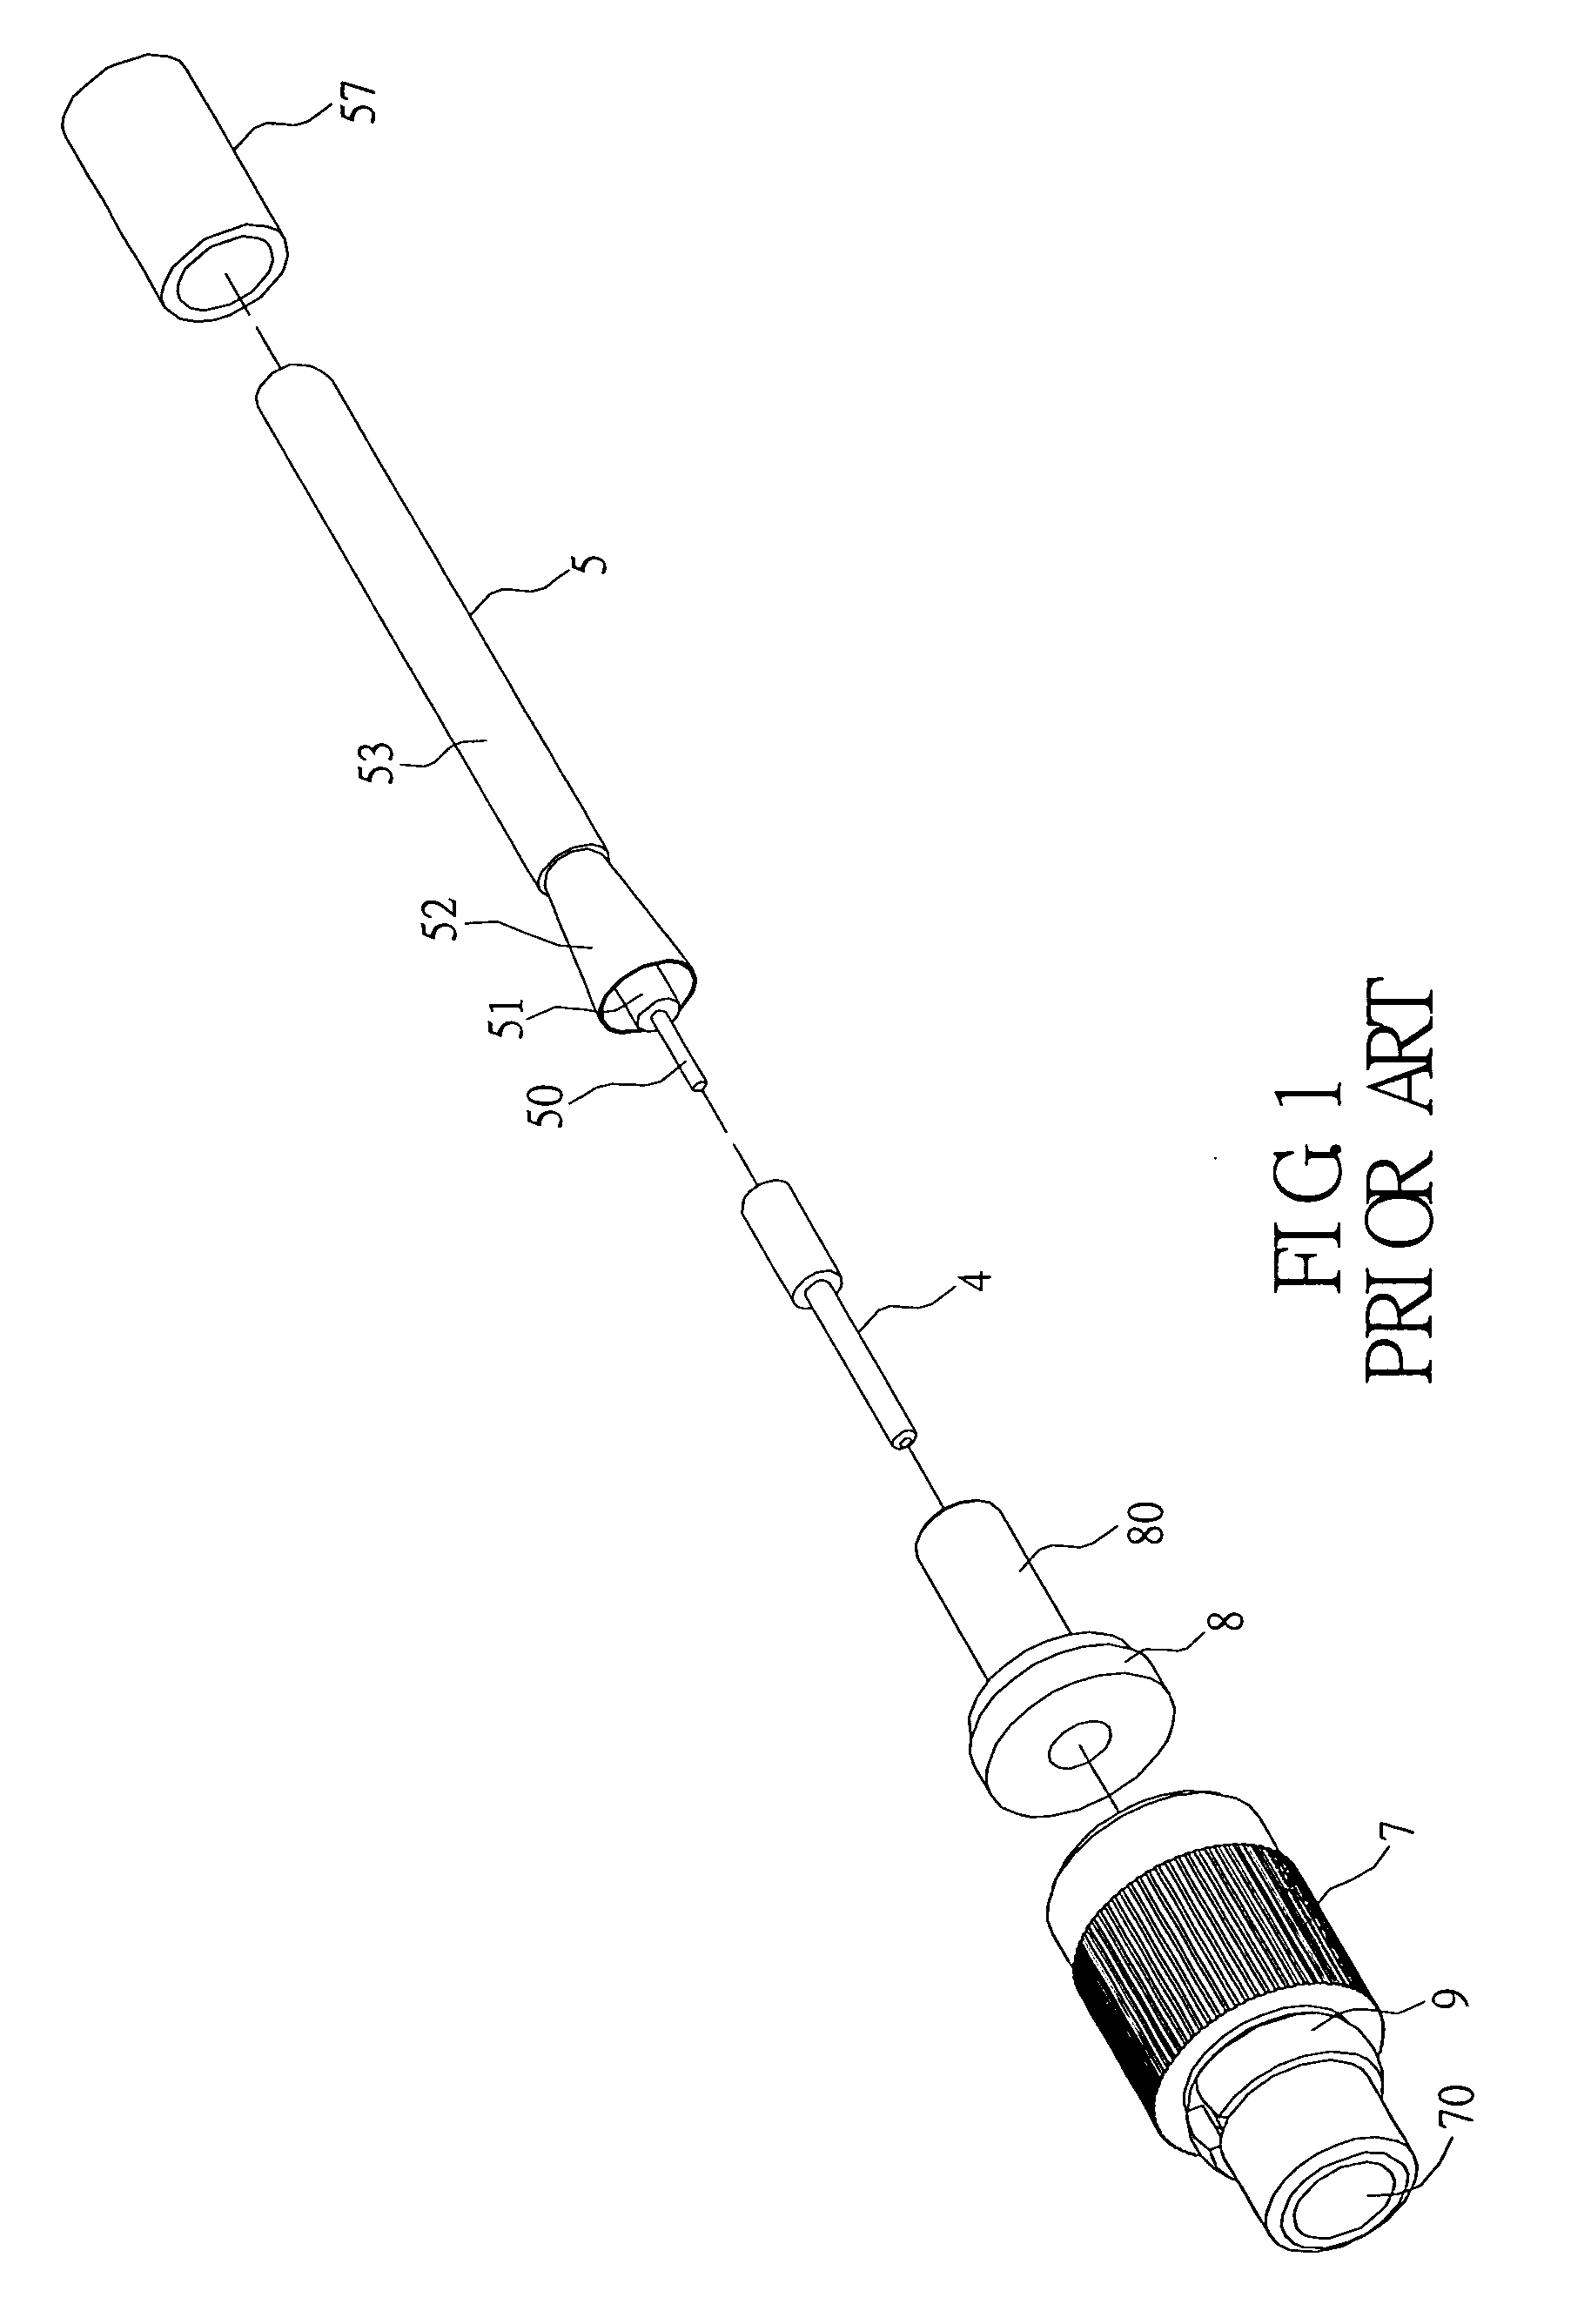 Coaxial connector